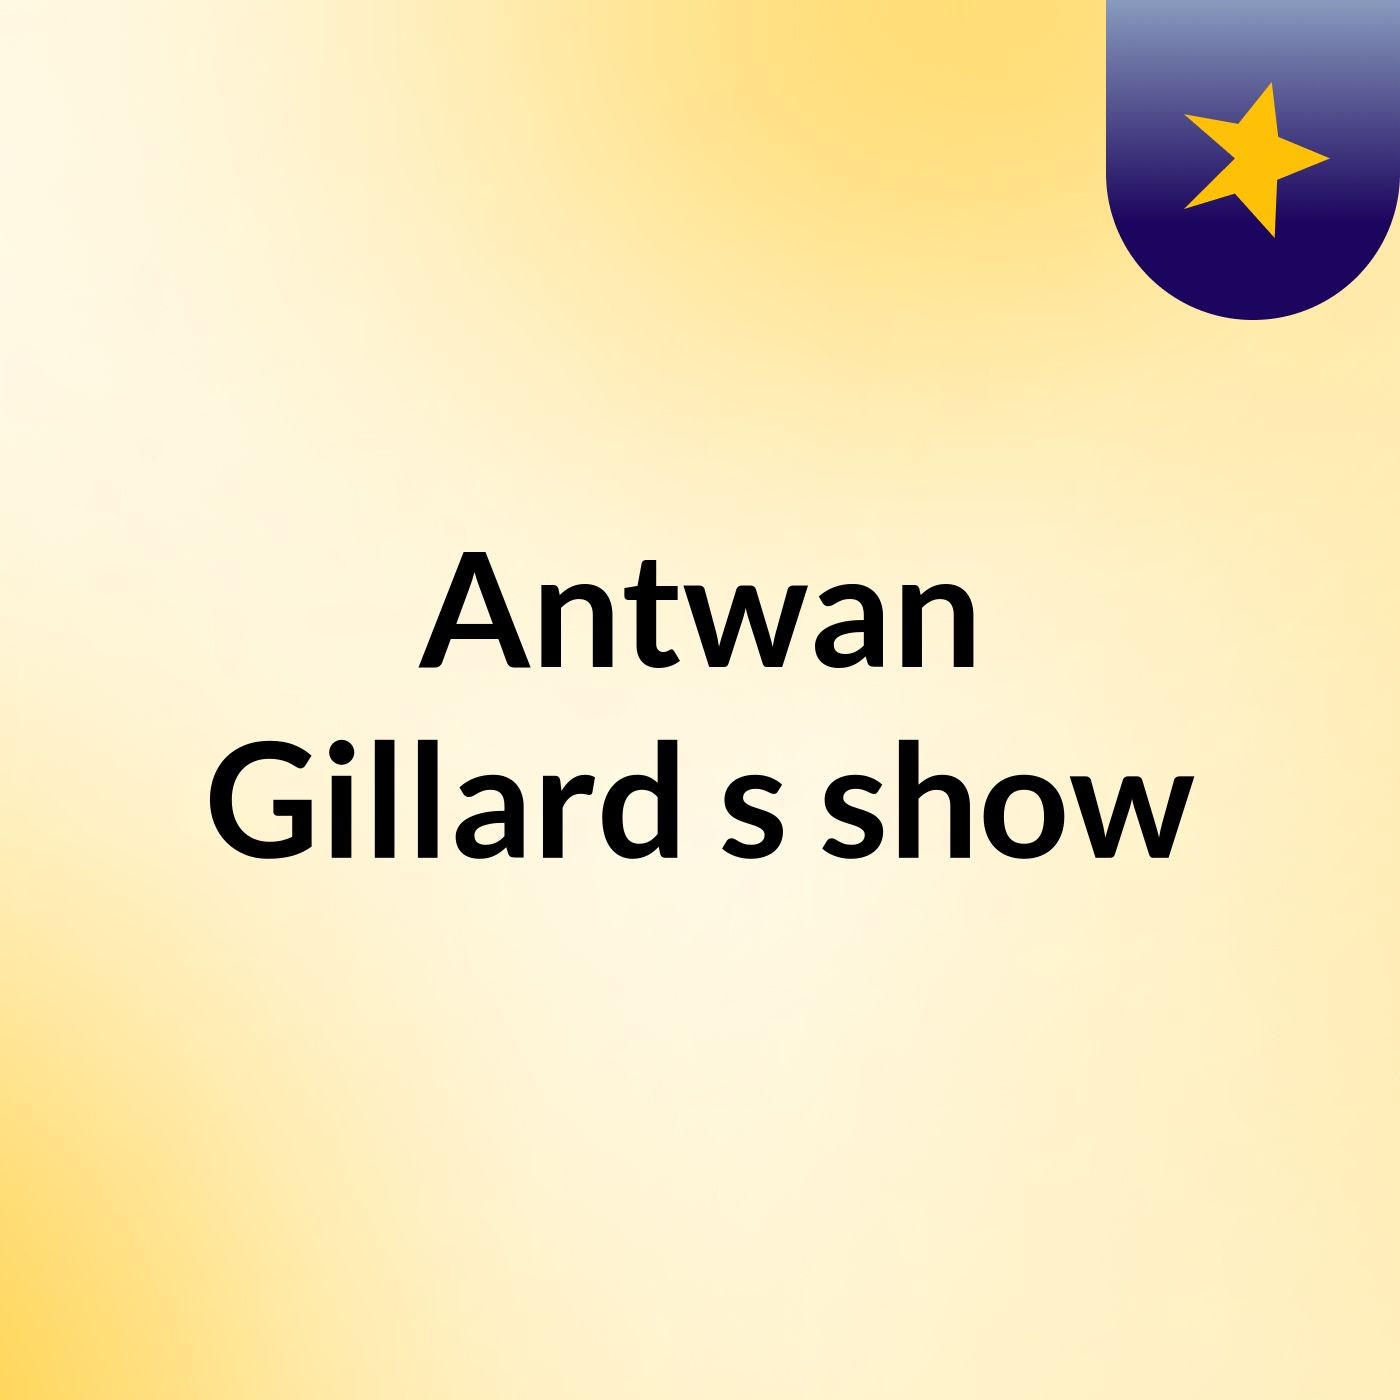 Antwan Gillard's show